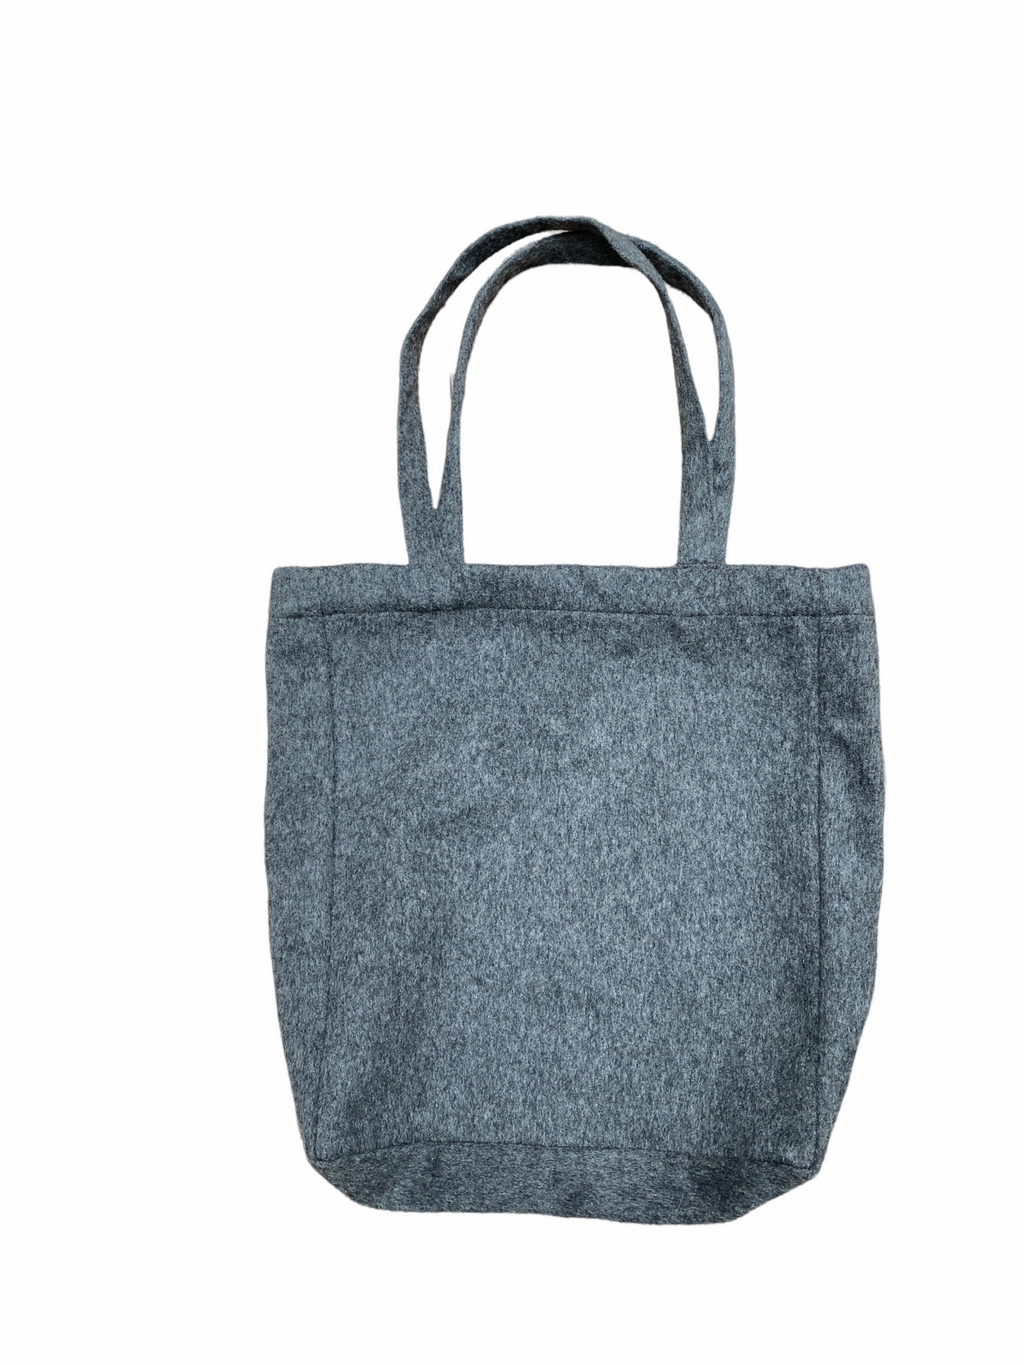 Grey Wool Totebag Bag handbag